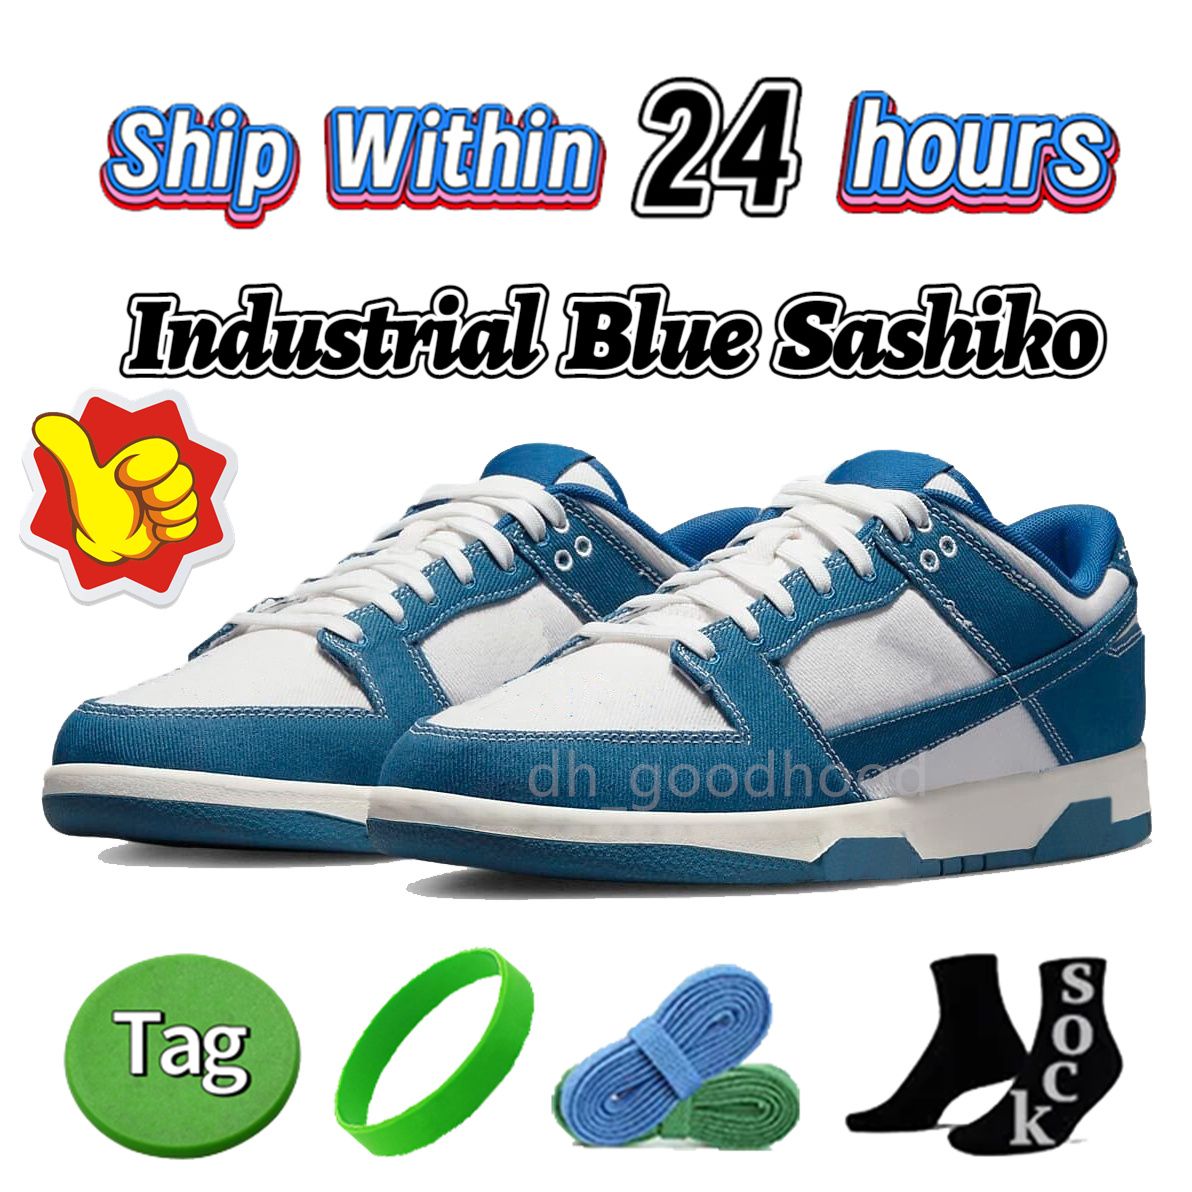 30 Industrial Blue Sashiko